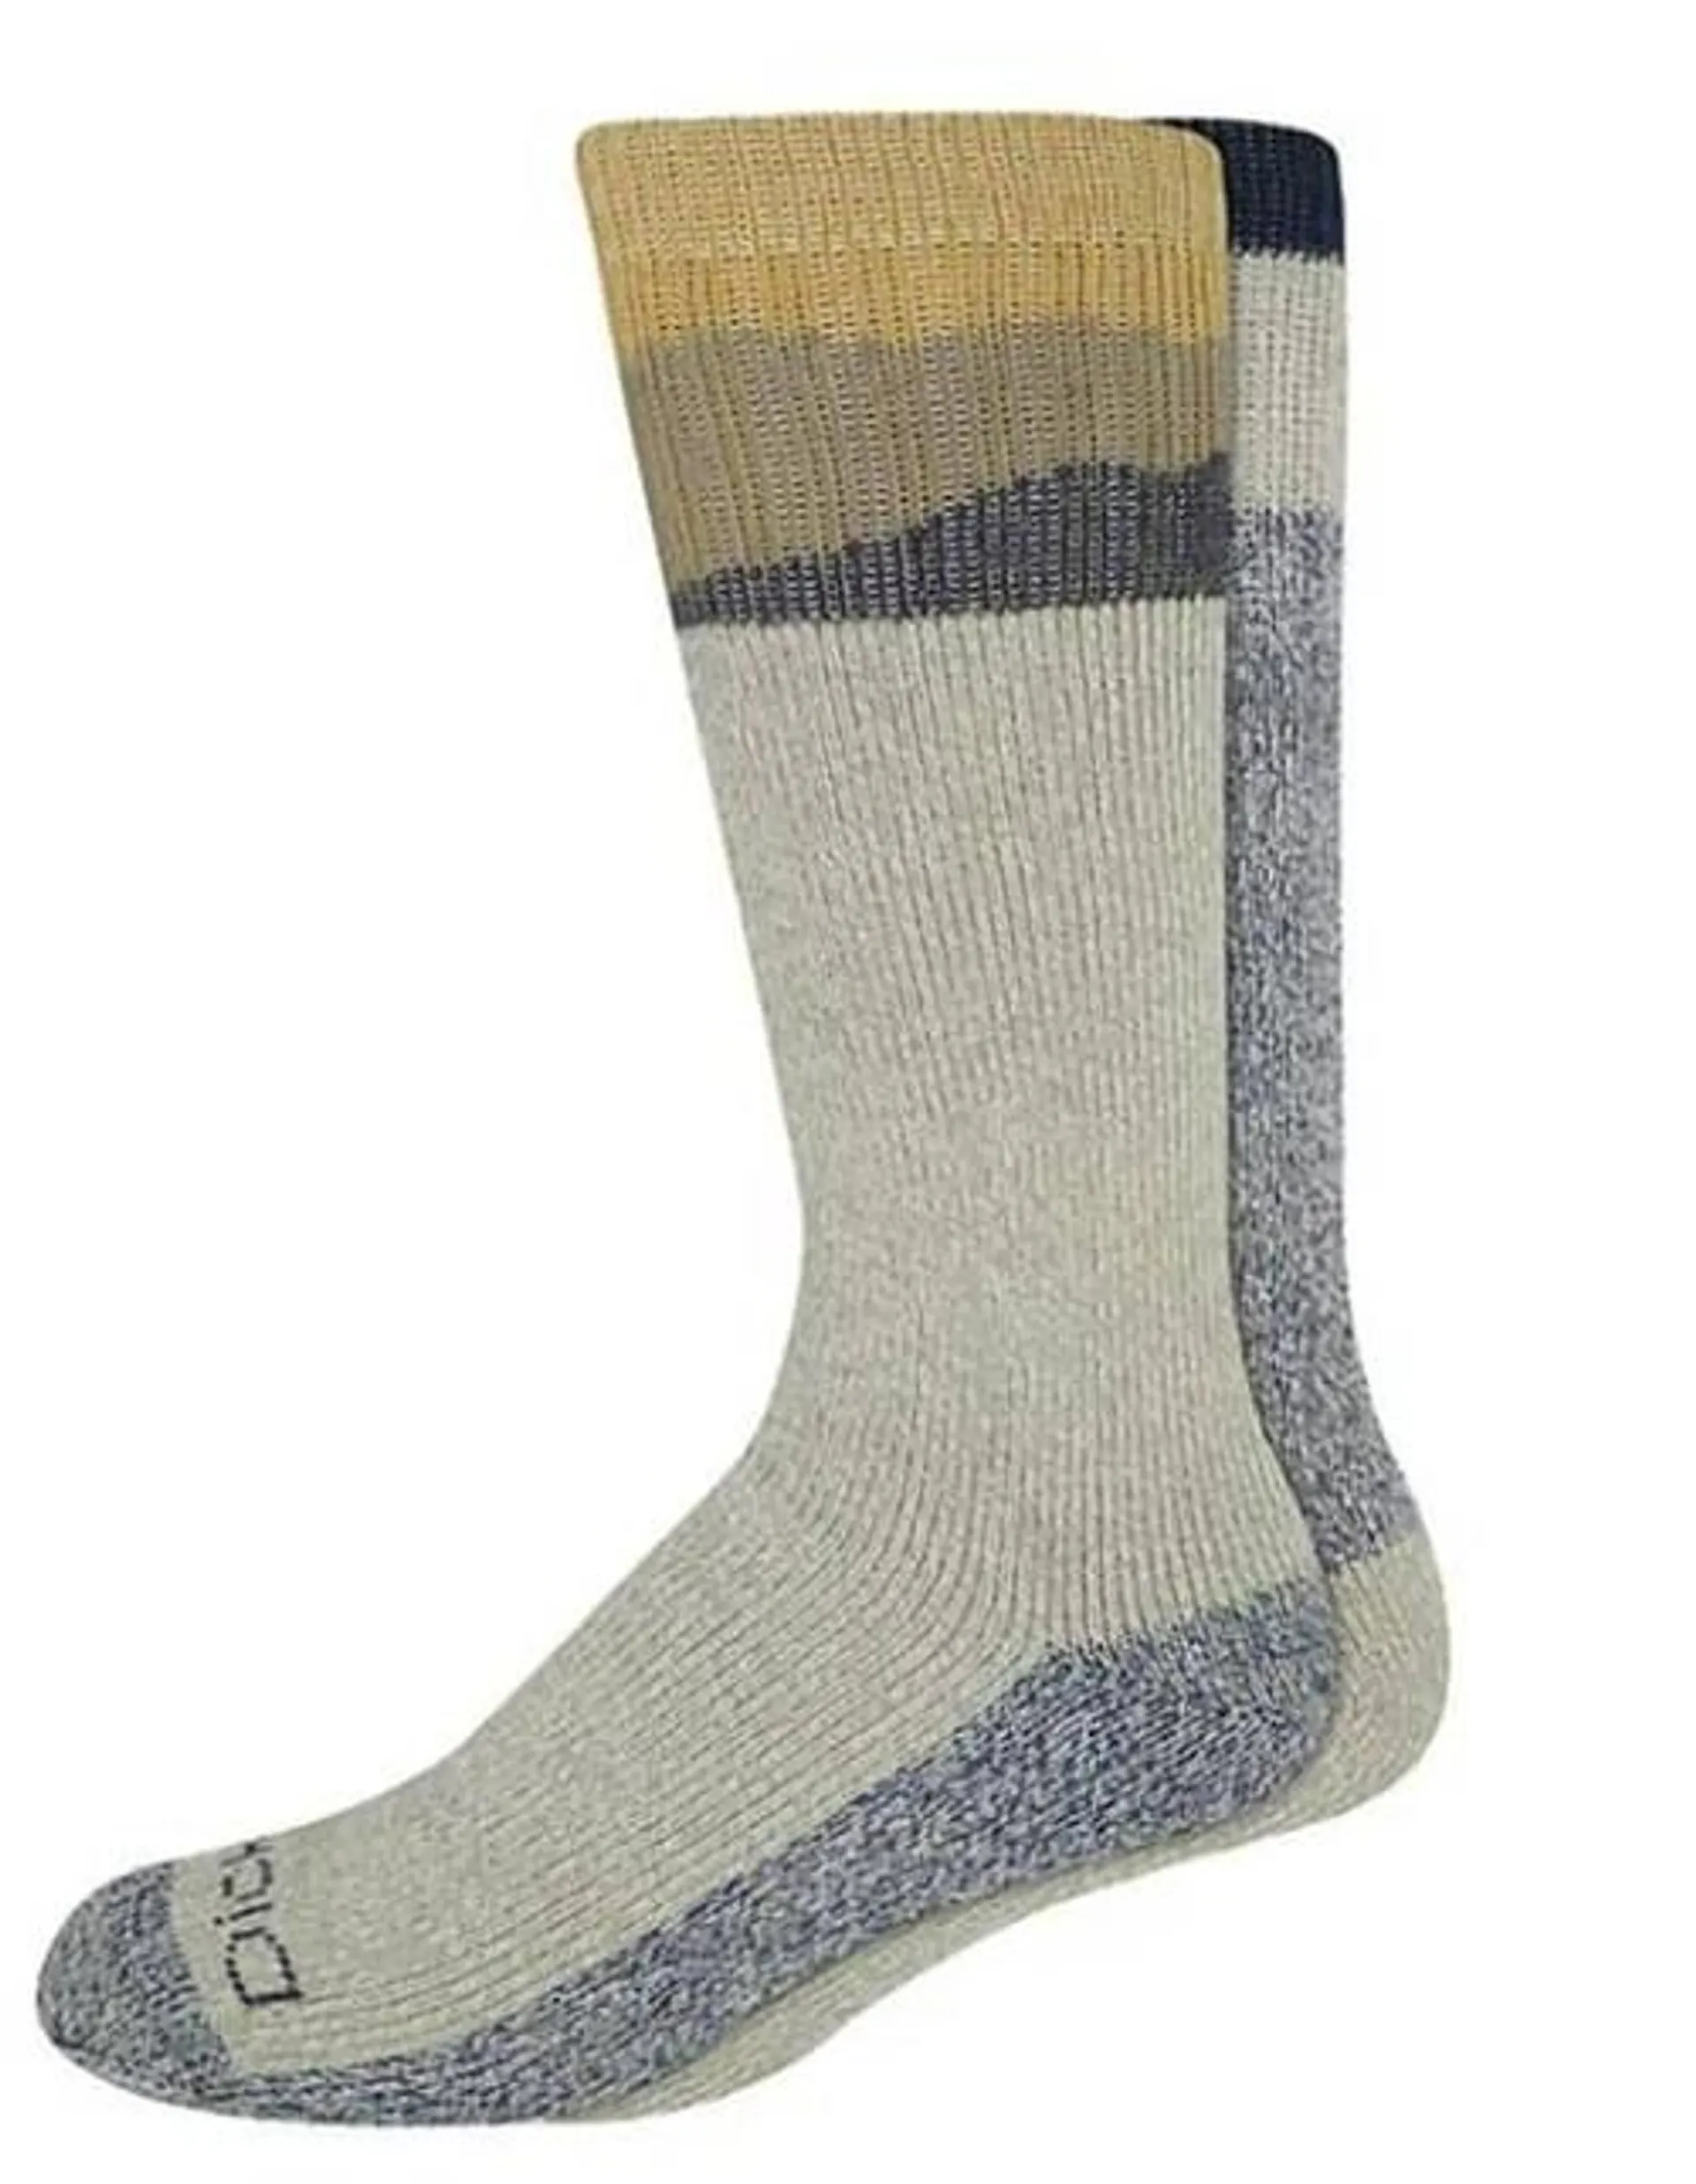 Dickies Men's Beige Pattern Charcoal Brushed Thermal Crew Socks - Assorted, 2 Pk